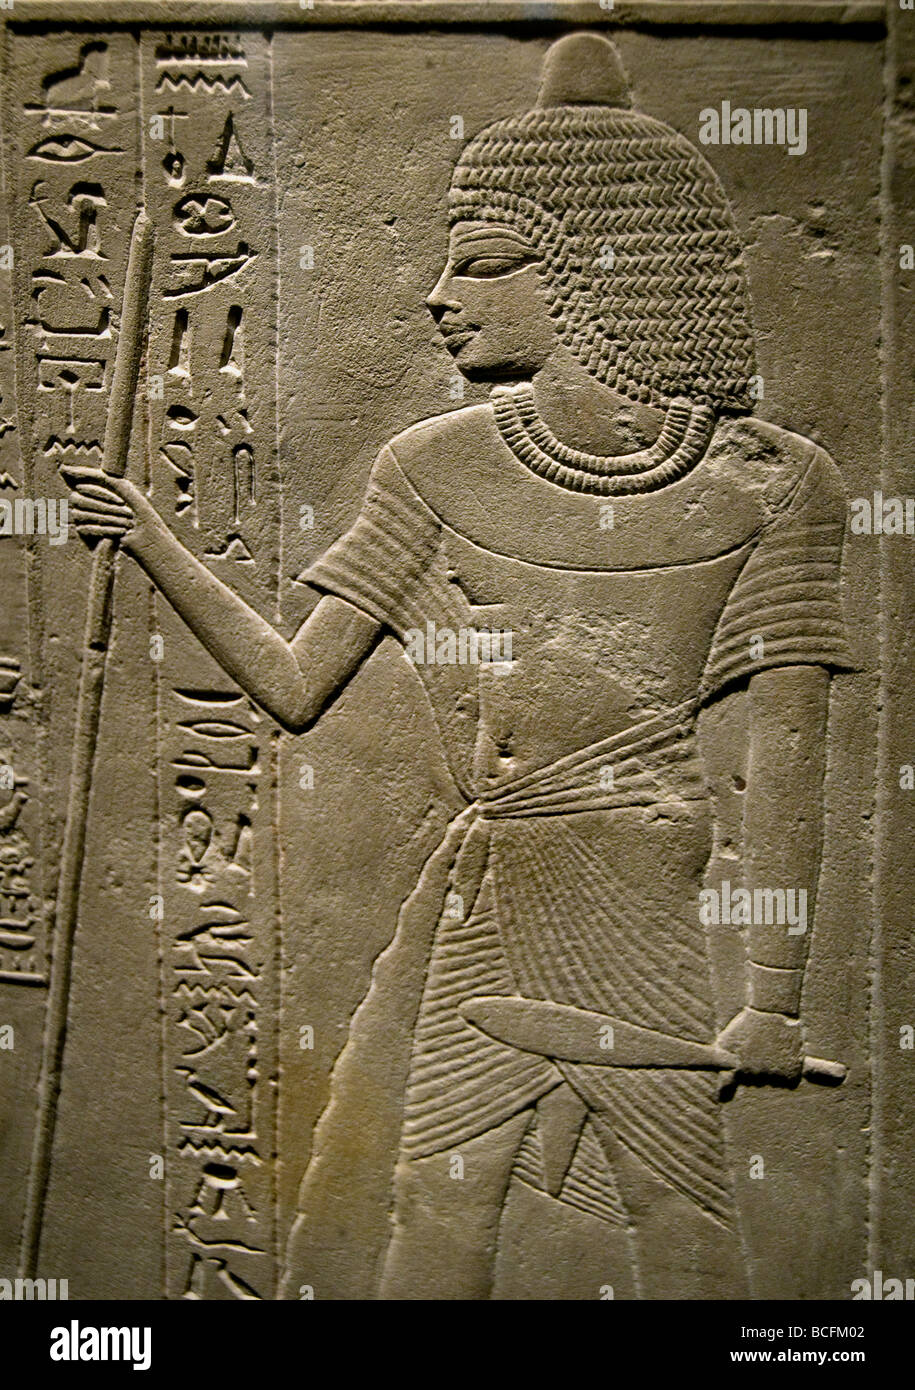 Egypt Egyptian museum archaeology civilization Stock Photo